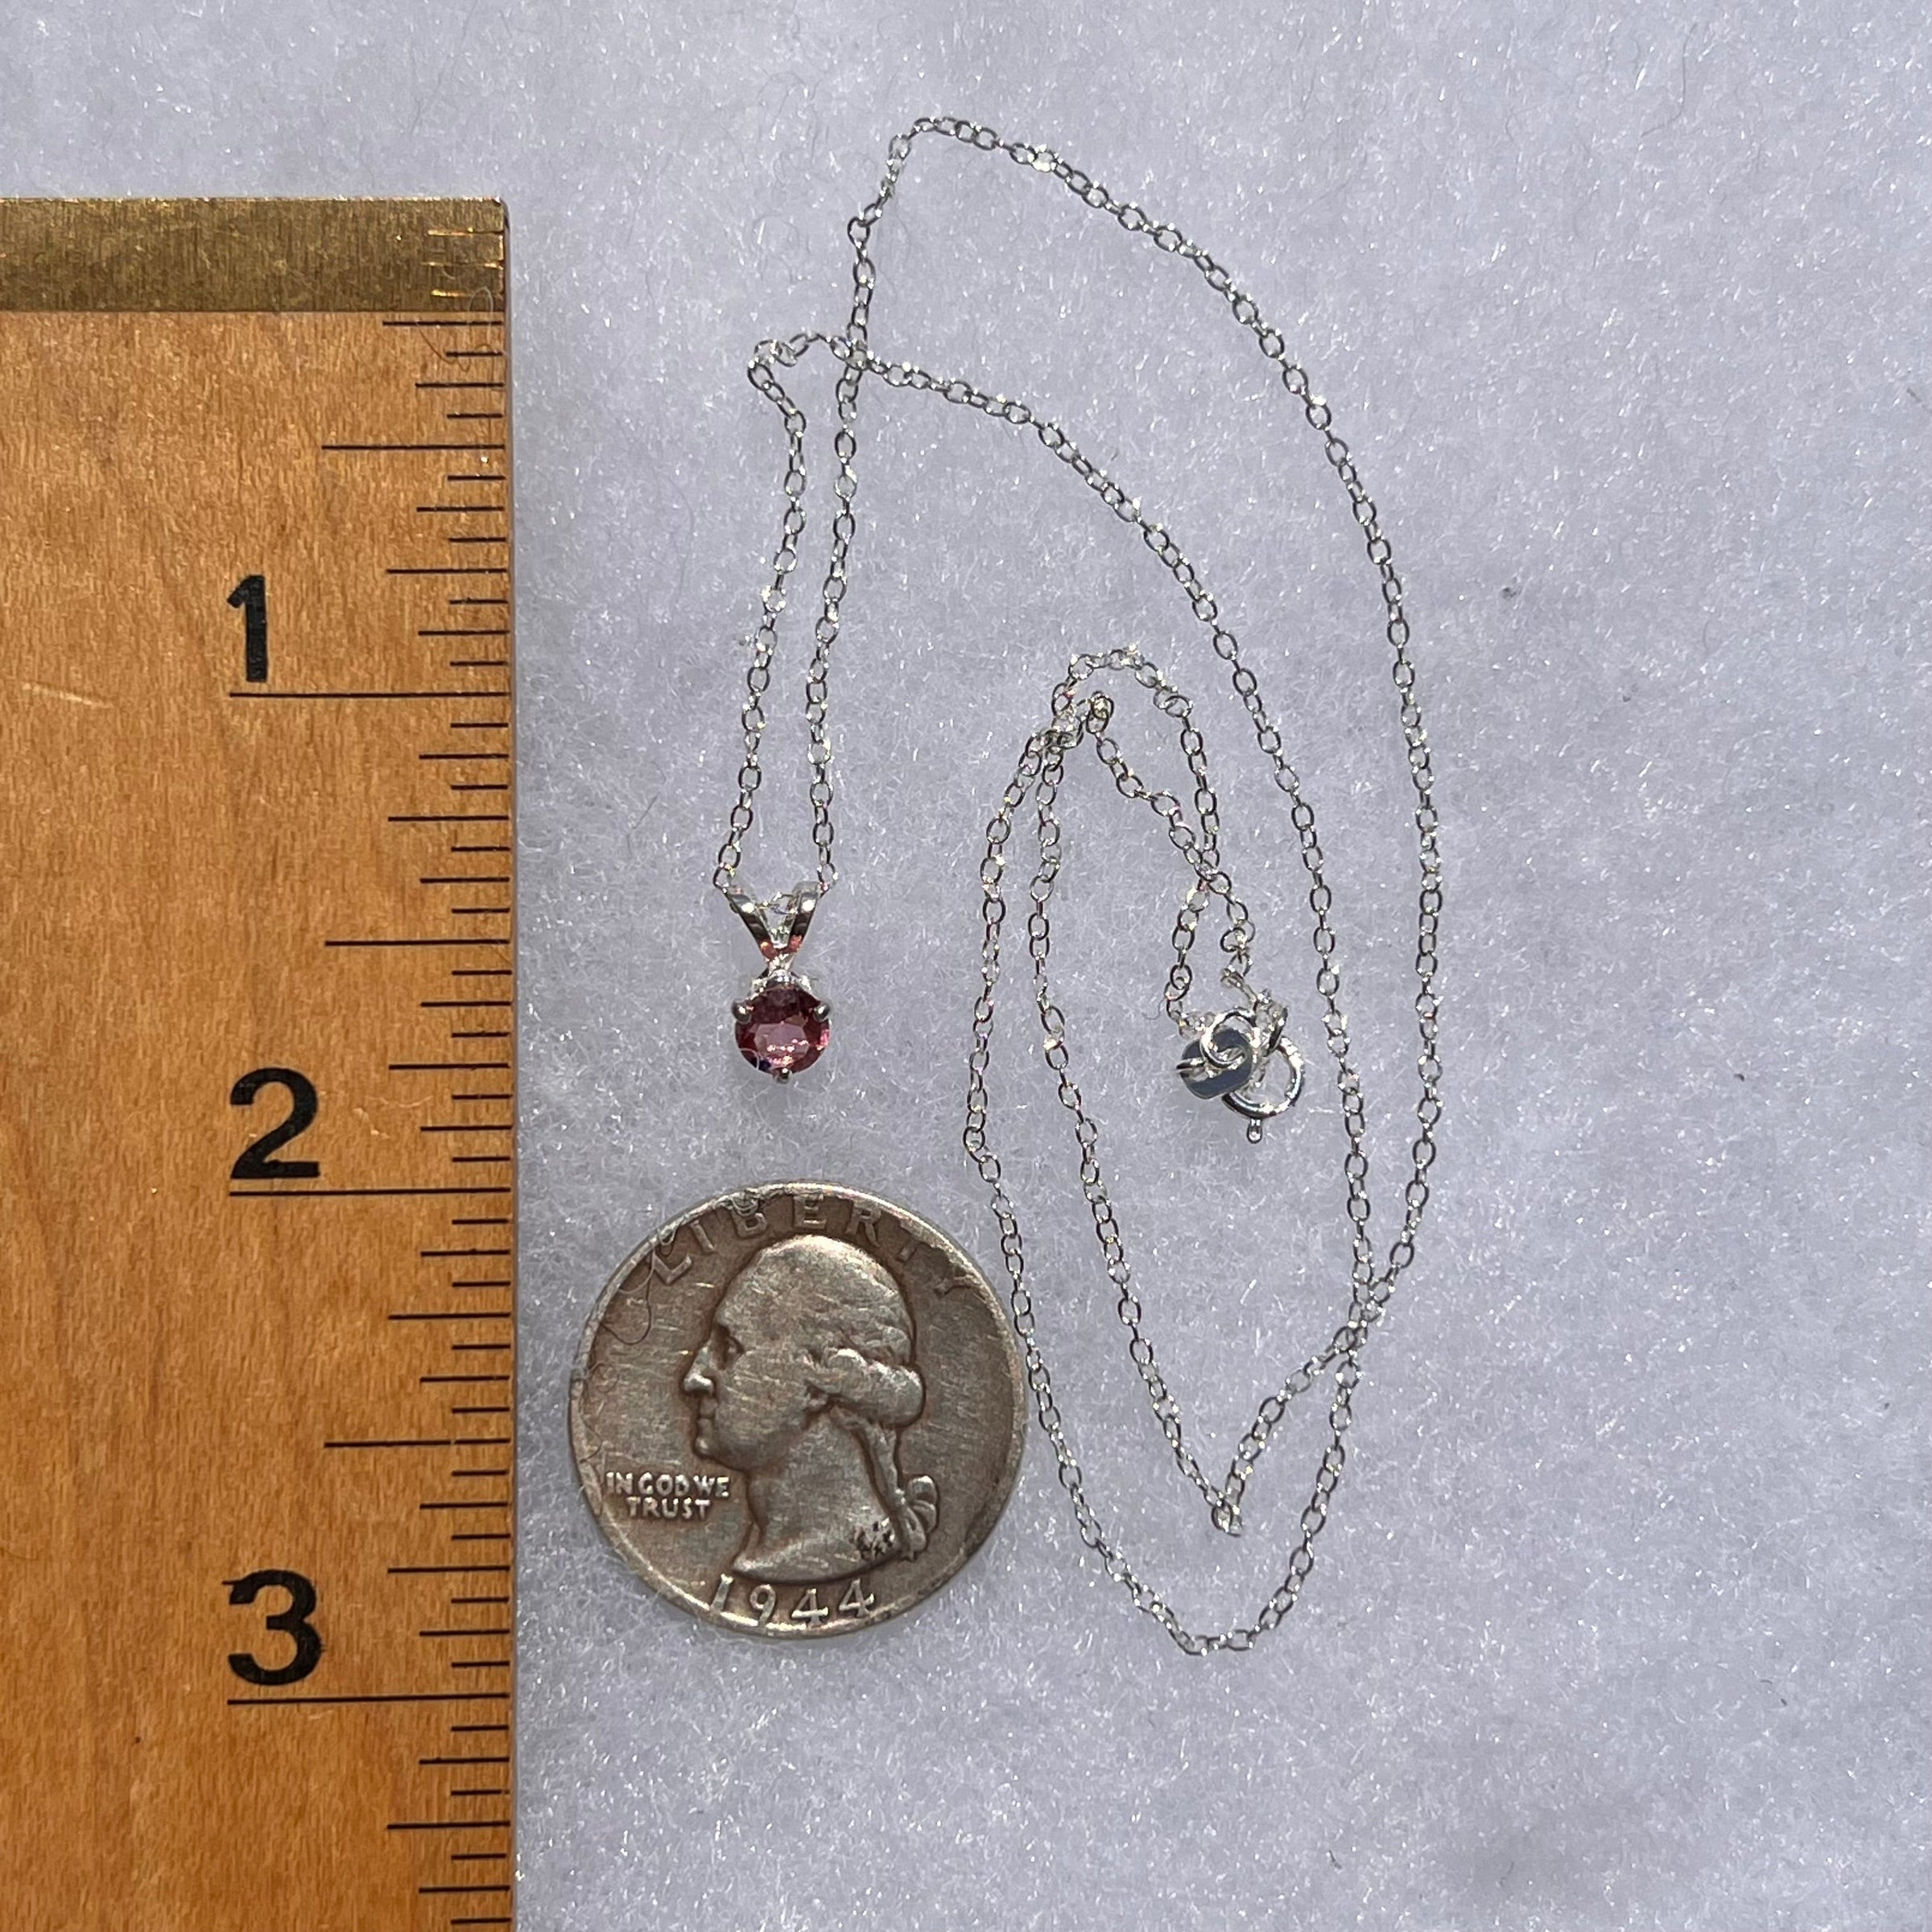 Rubellite Pink Tourmaline Necklace Sterling #5157-Moldavite Life